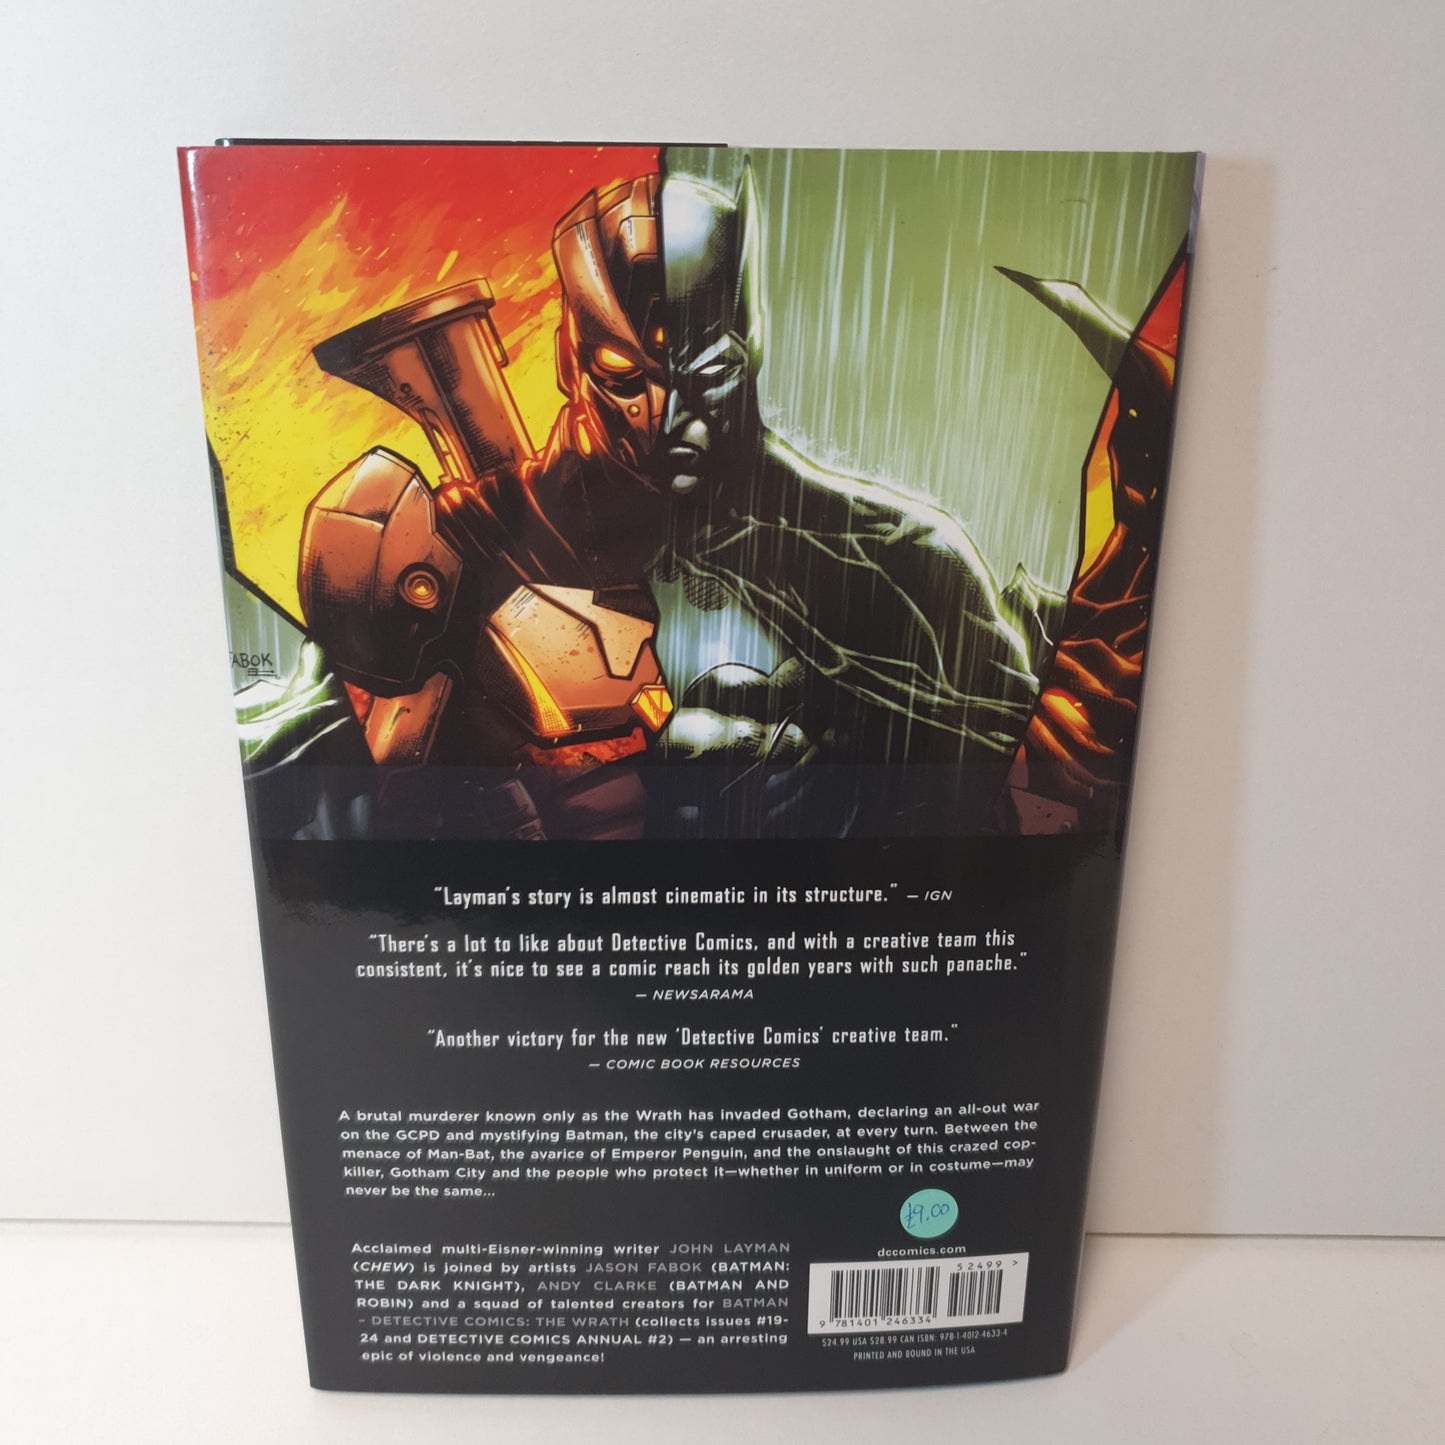 Batman Detective Comics Vol 4 The Wrath by Layman, Fabok & Clarke (2014)